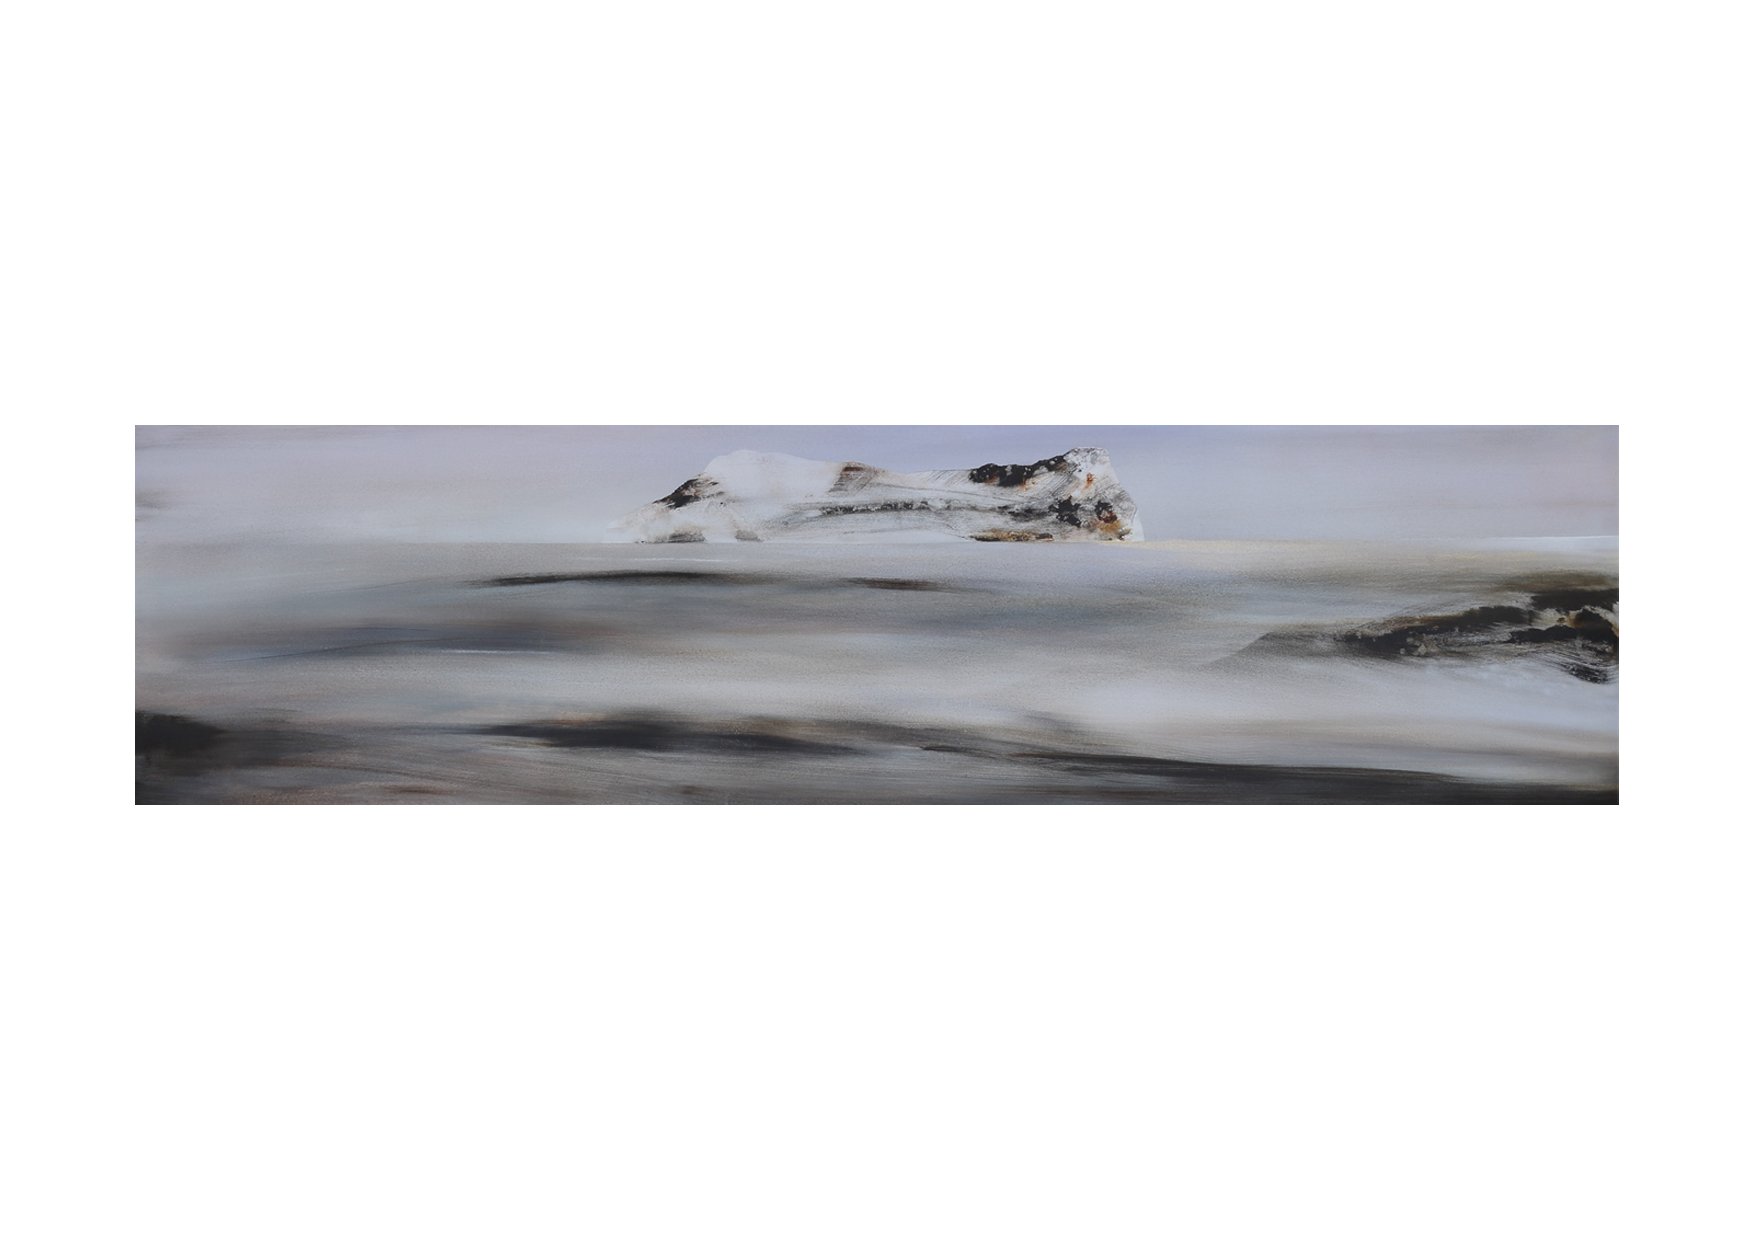  Wyn-Lyn TAN  The Colour of Horizons  2015 Acrylic on canvas H61 x W230 cm  